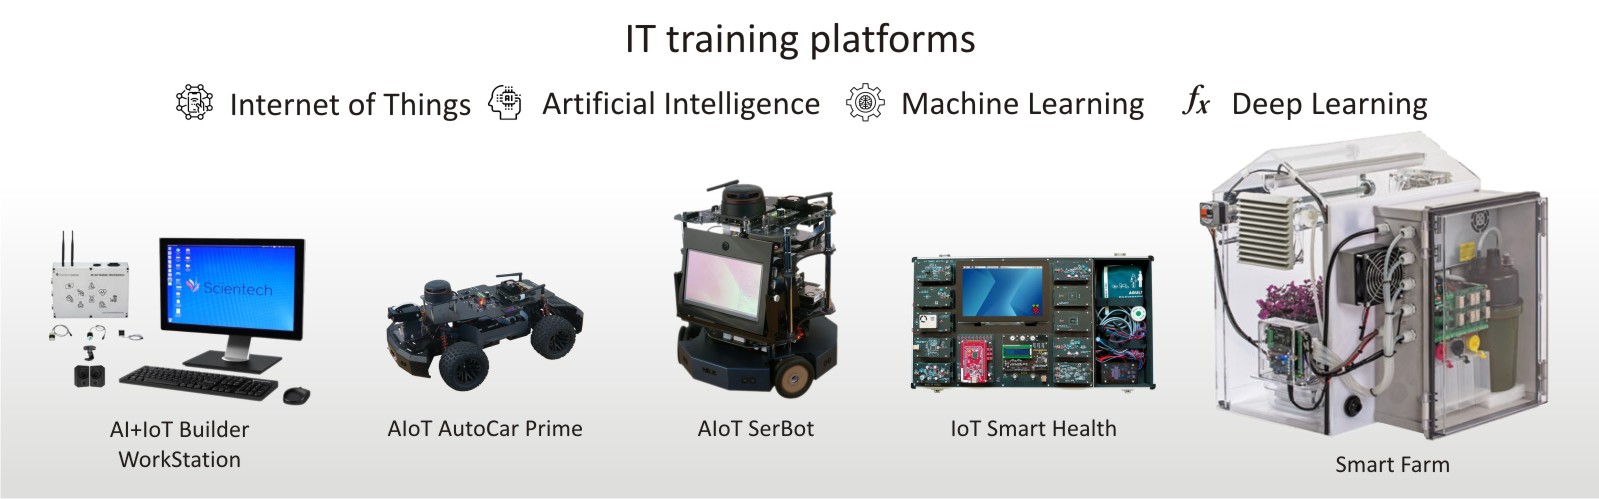 IT Training Platforms